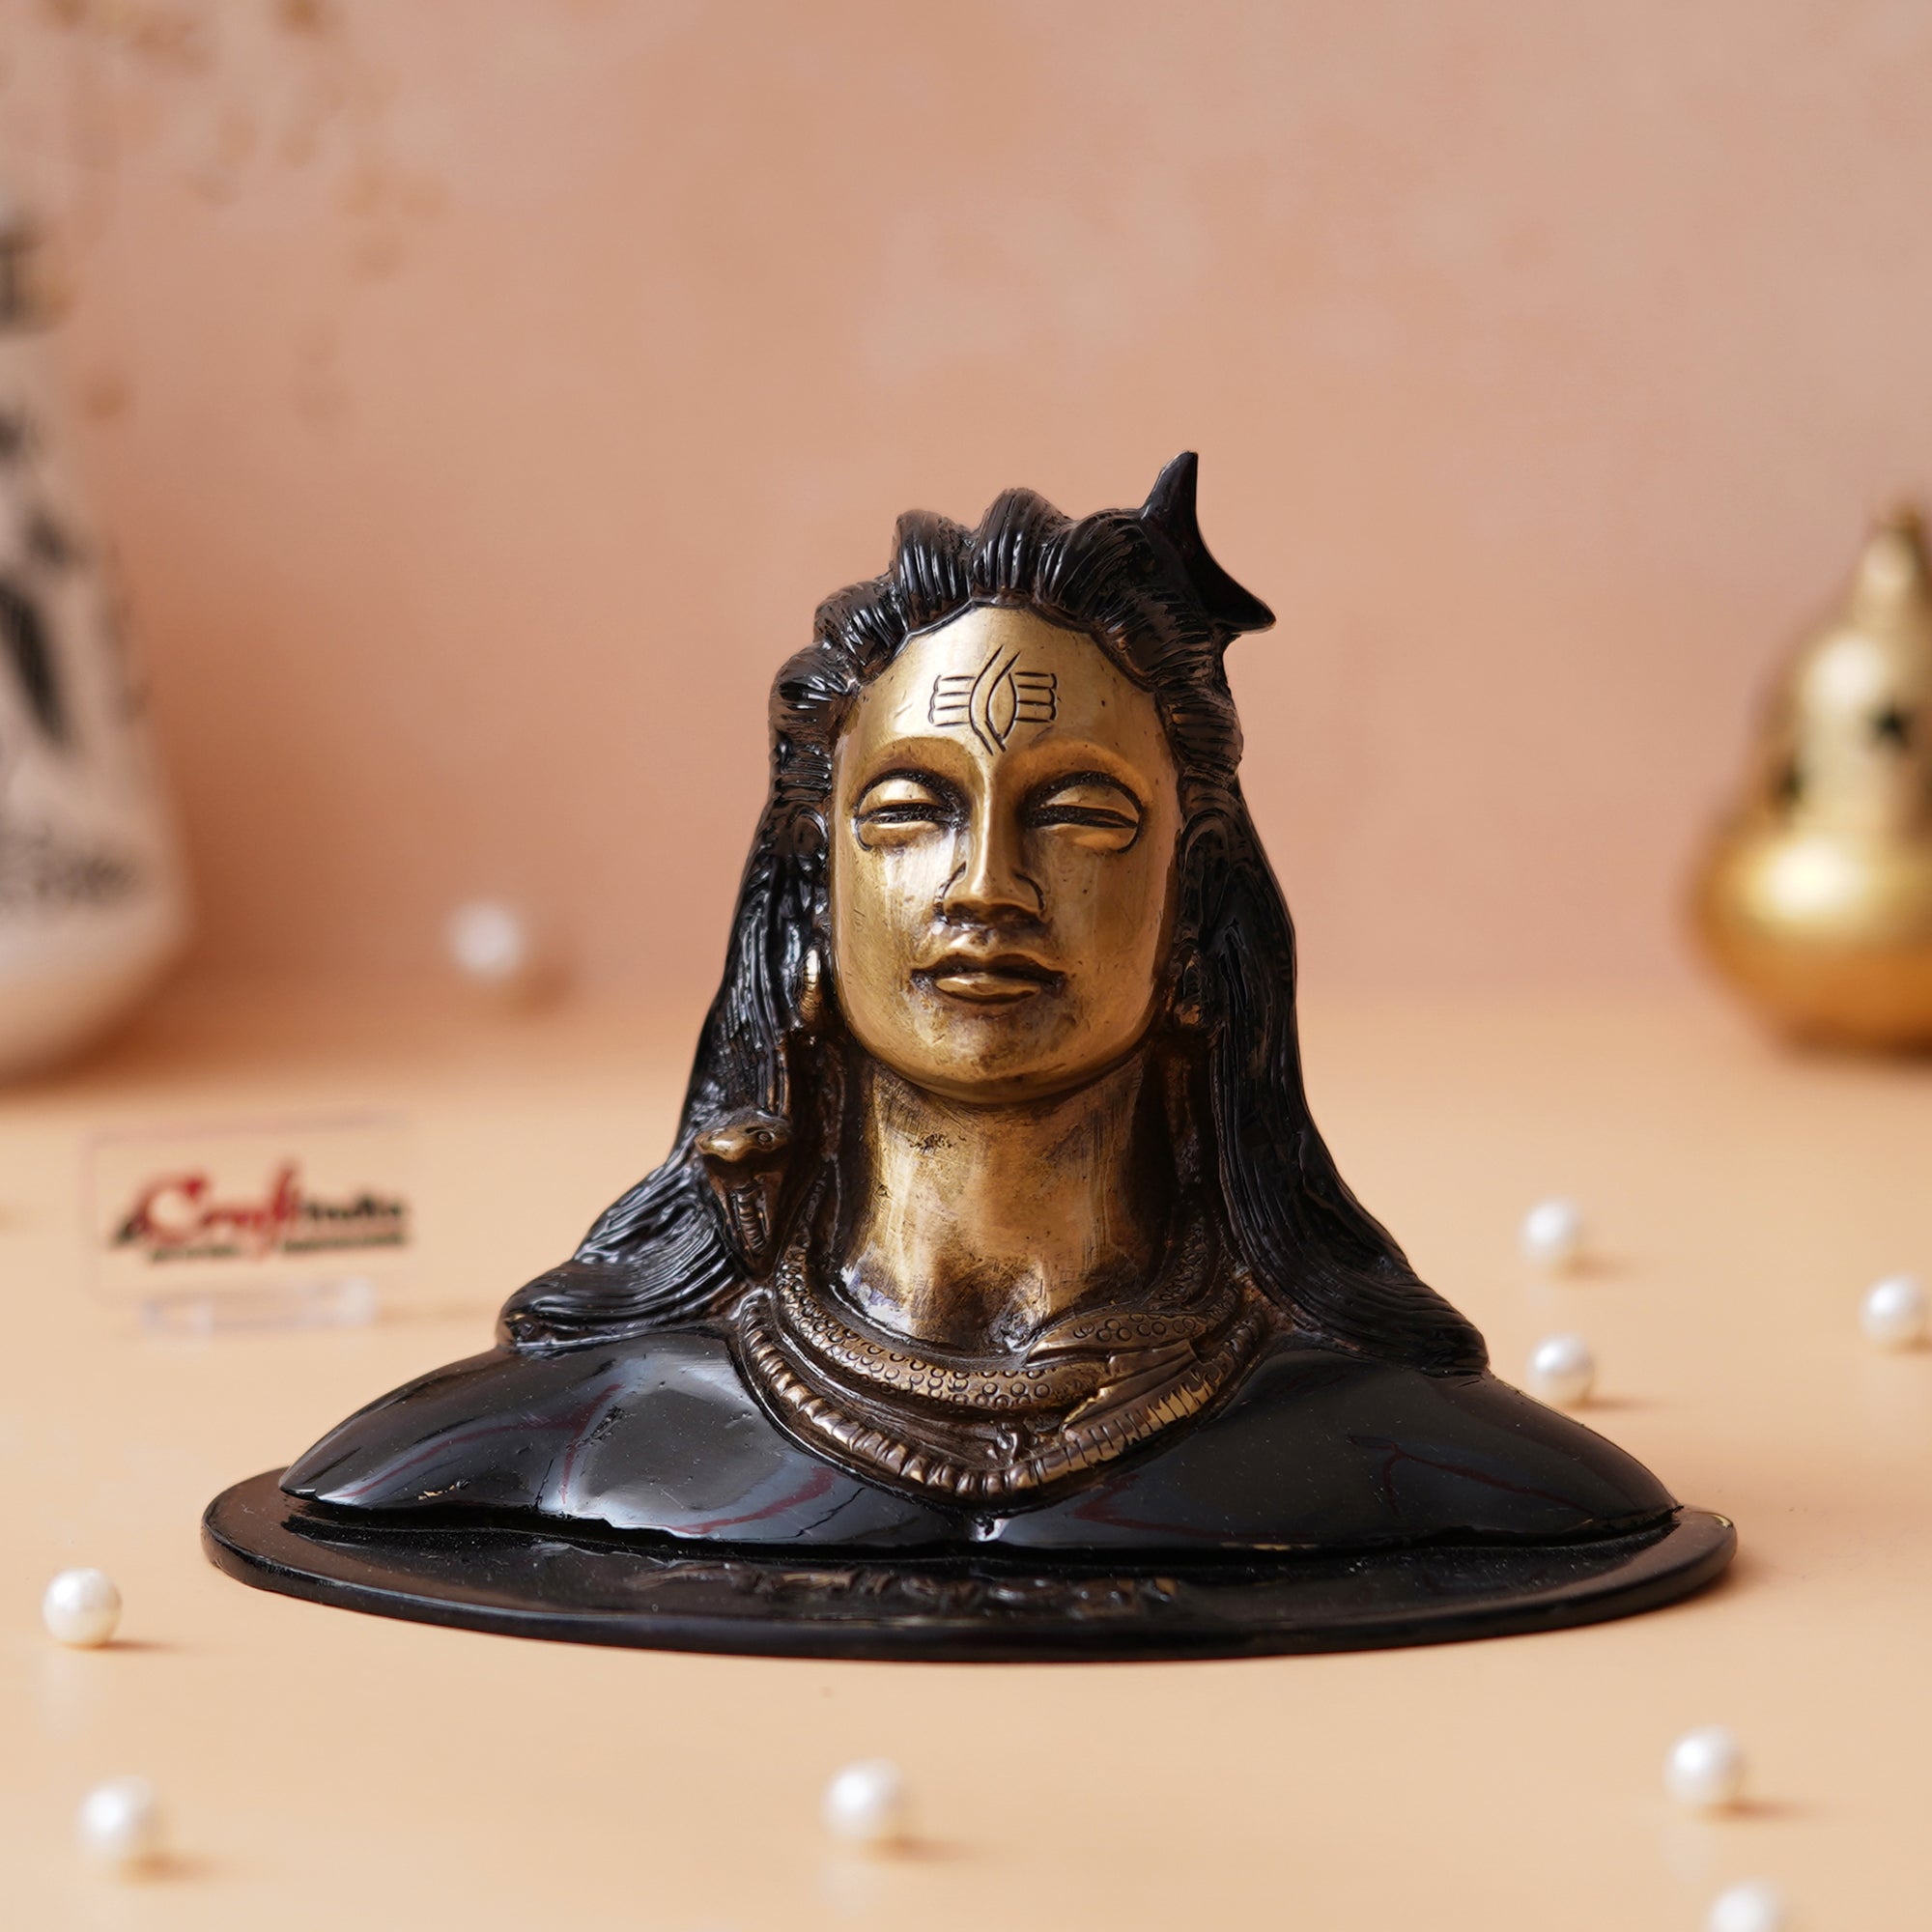 Black and Golden Brass Lord Adiyogi Shiva Statue, Shiv Murti, Shiva Idol for Car Dashboard, Home Office Decoration - Gift for Maha Shivratri Festival